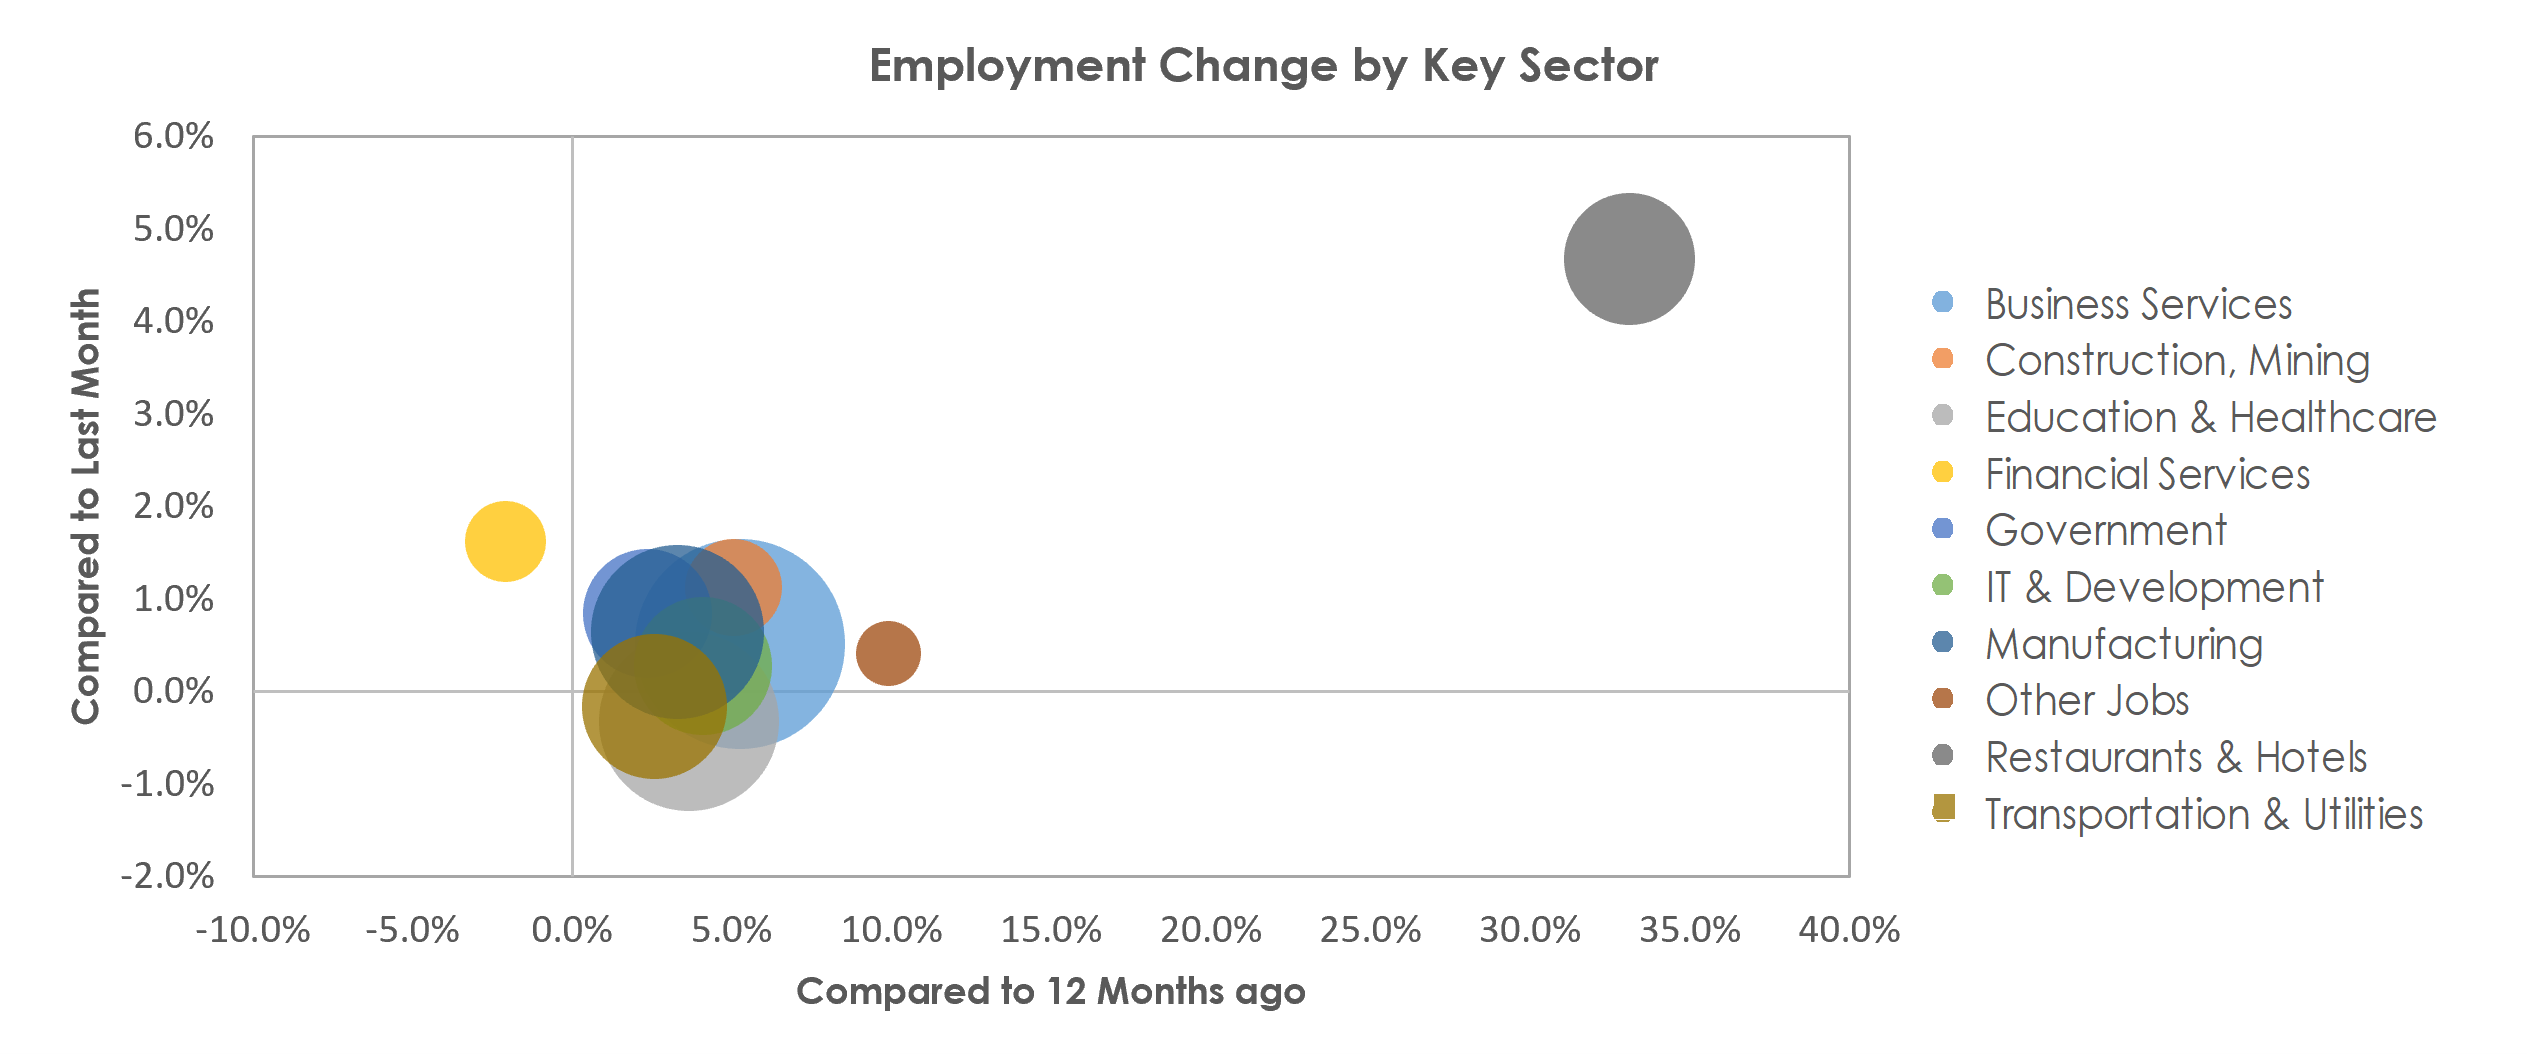 San Jose-Sunnyvale-Santa Clara, CA Unemployment by Industry April 2022